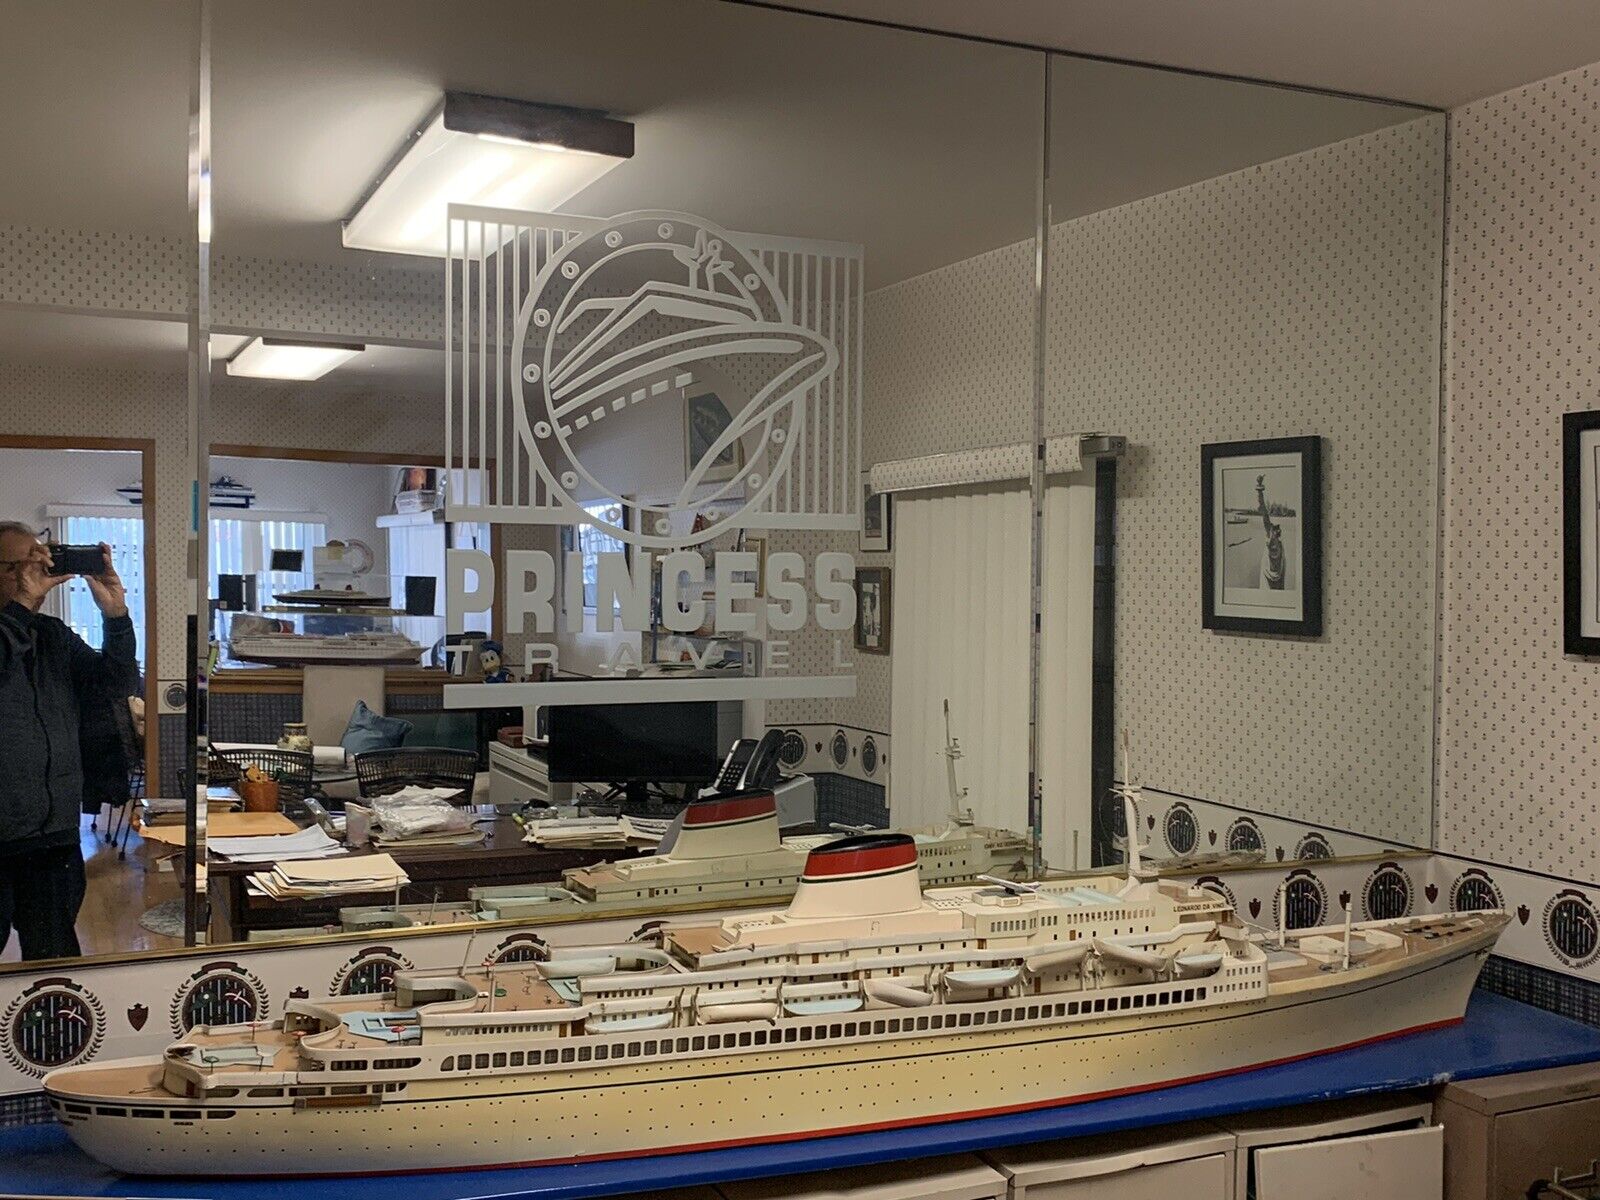 8 Foot ship model Ss Leonardo Da Vinci-from company headquarters Of Italian Line